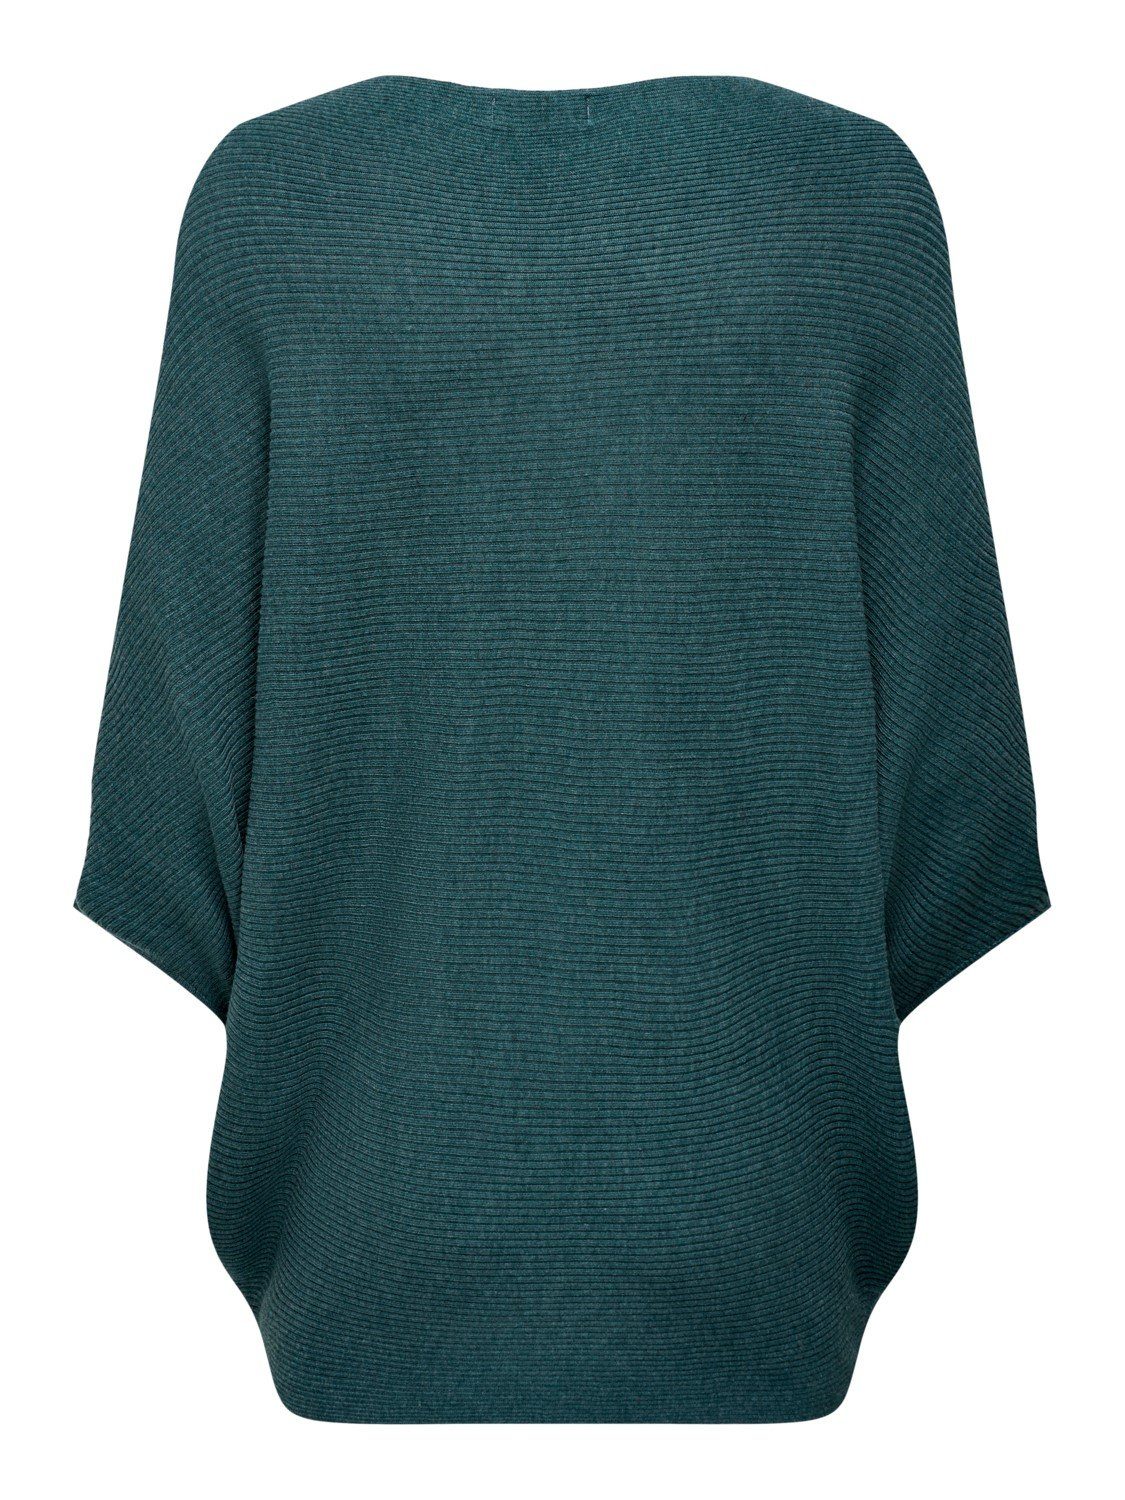 Damen de YONG de Grün Oberteil Yong JdyNew Sweater Pullover JACQUELINE Strickpullover Jacqueline Behave